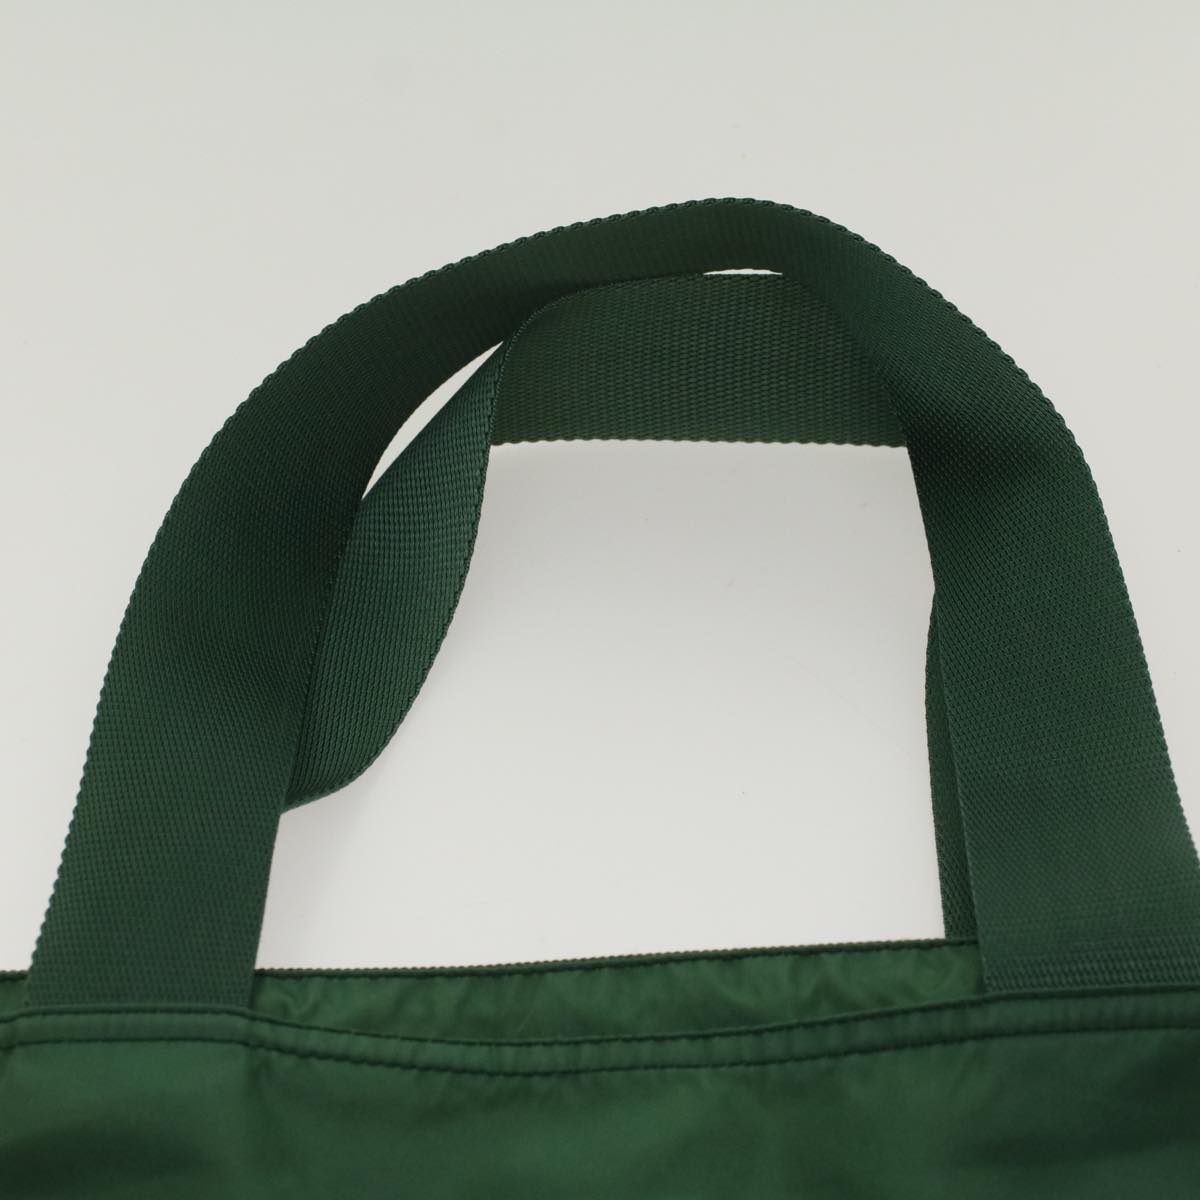 PRADA Tote Bag Nylon Green Auth 51470